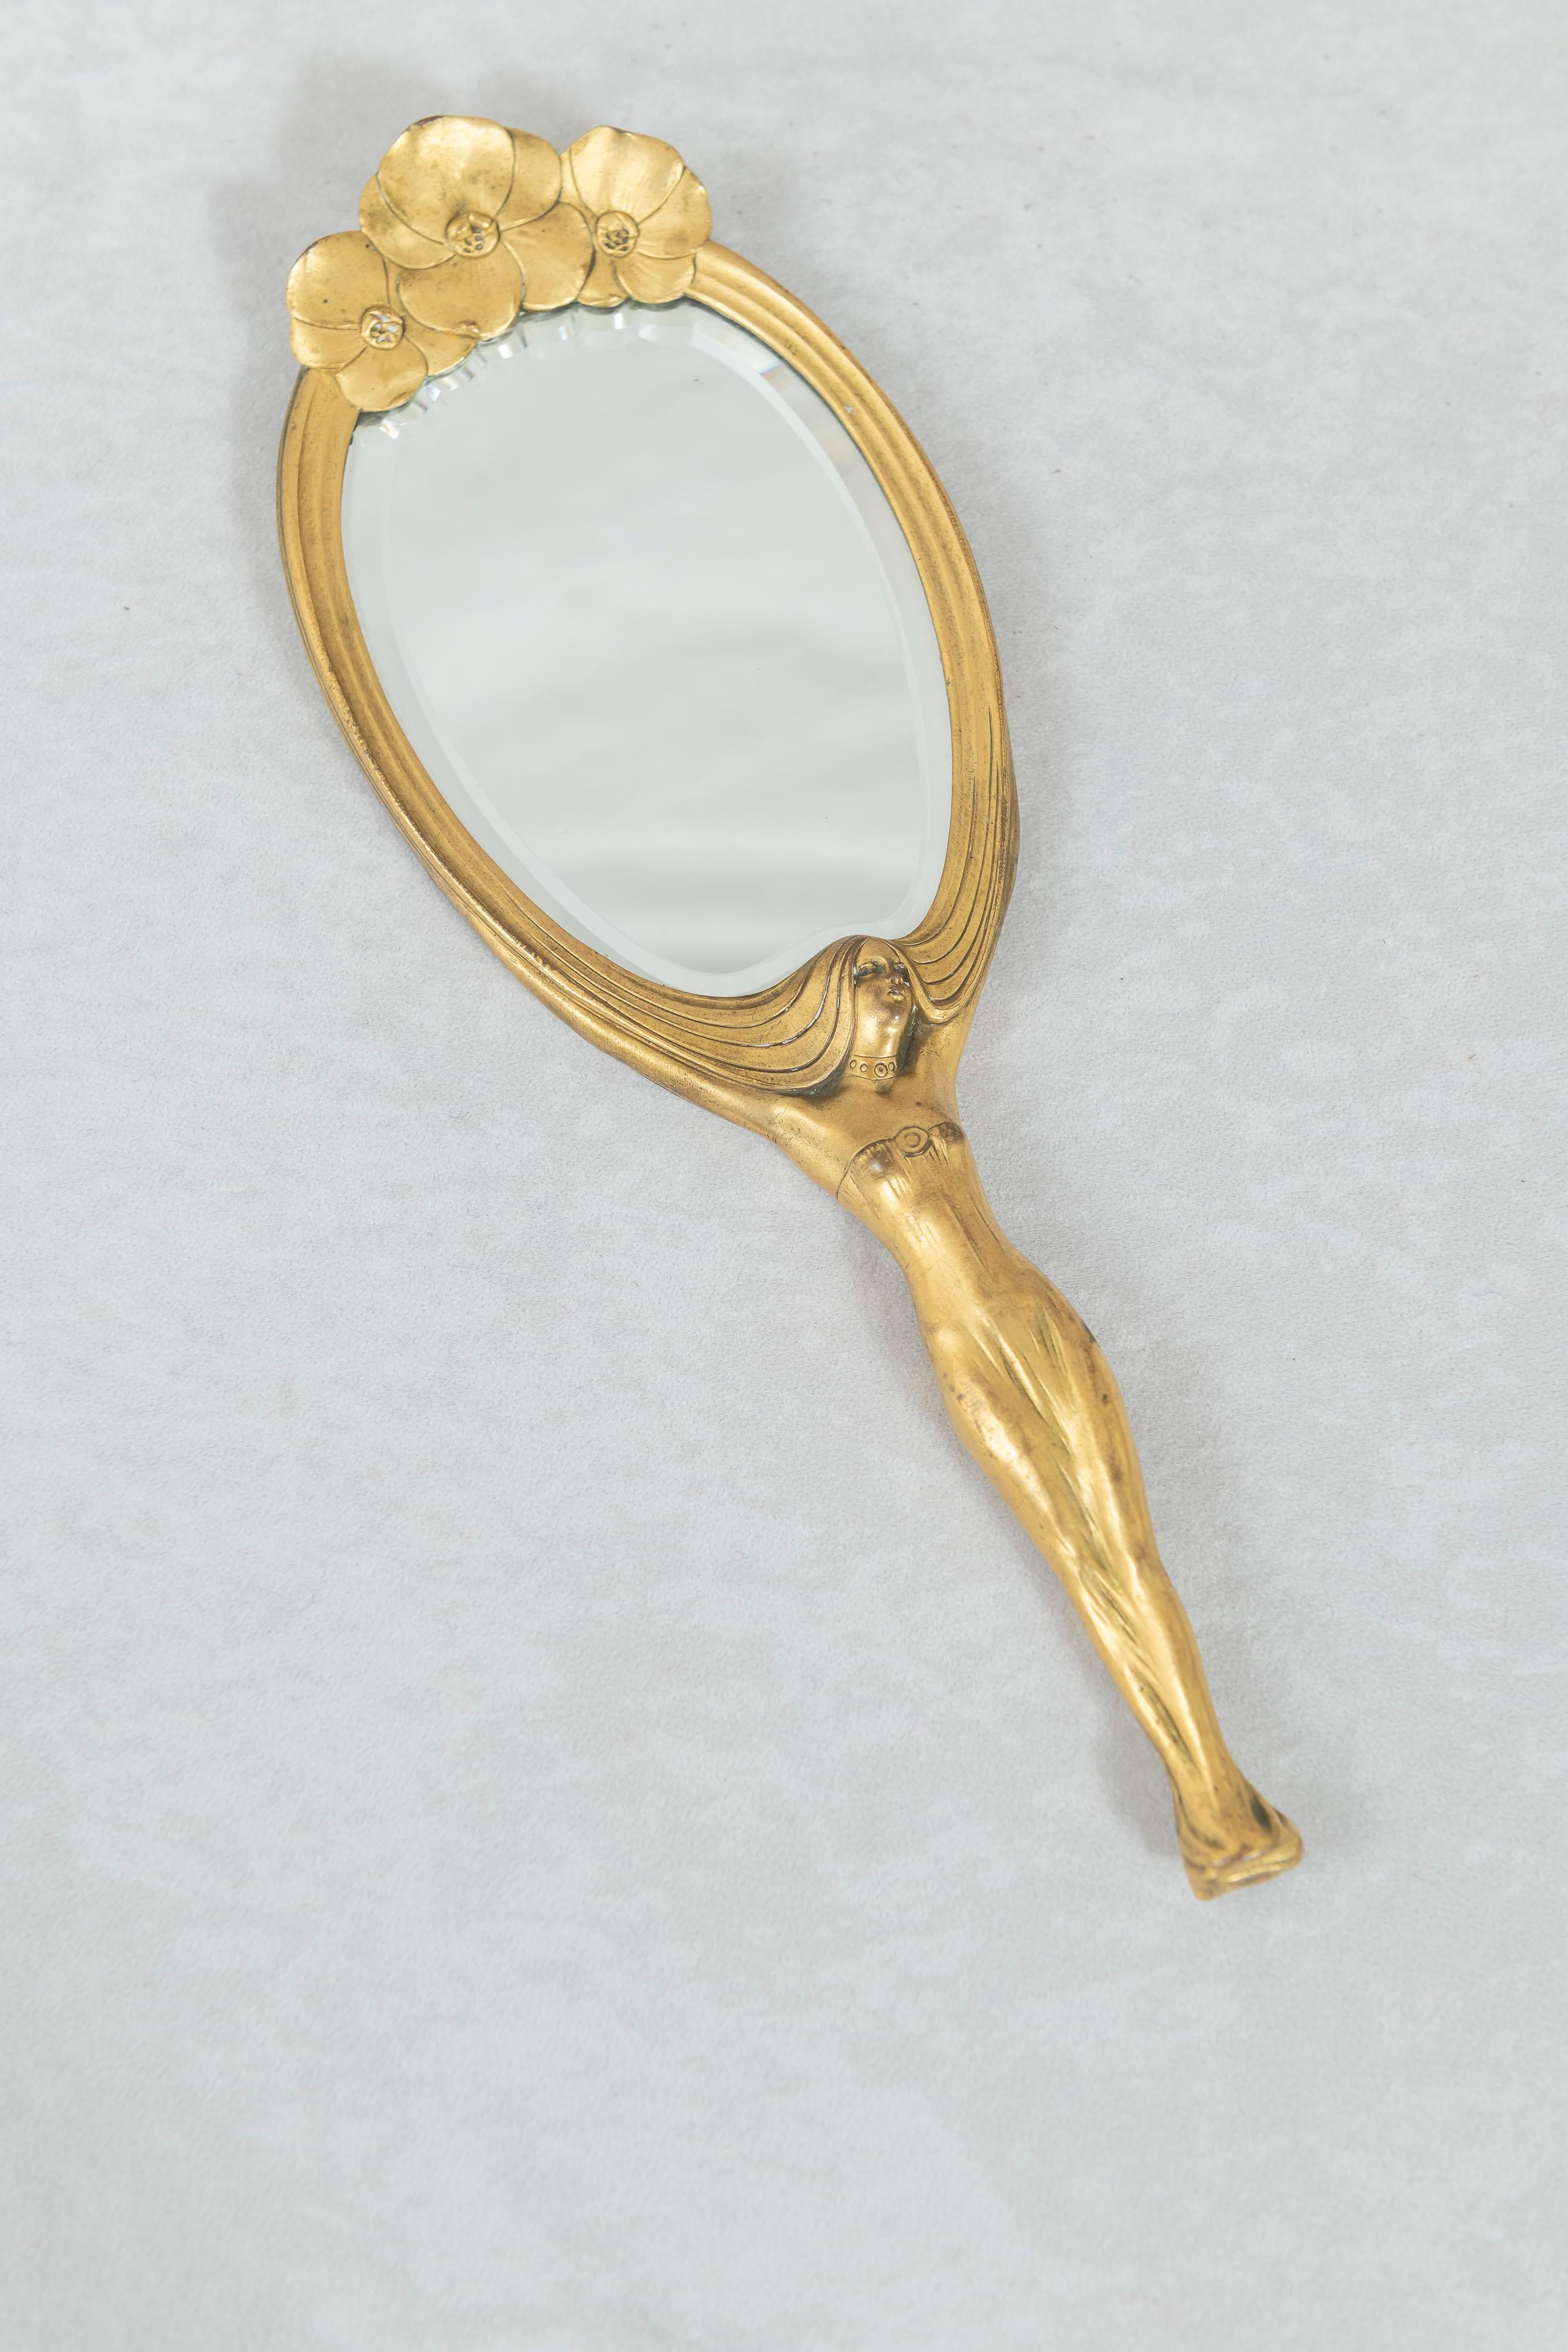 French Art Nouveau Hand Mirror, Gilt Bronze, Artist Signed Karl Bergline, circa 1900